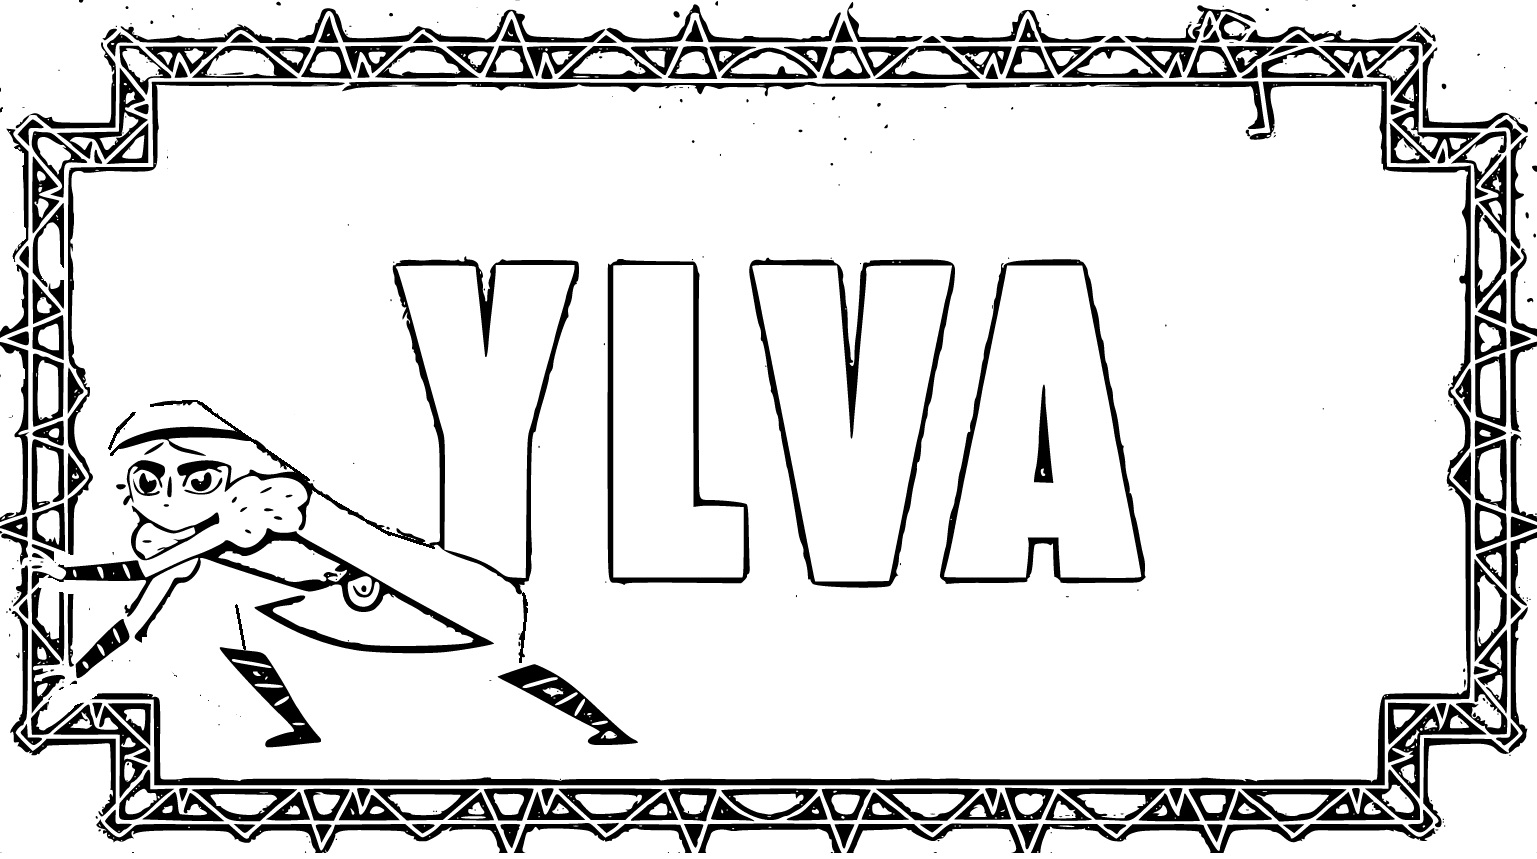 Printable Viking Skool Ylva outline Coloring Page for kids.